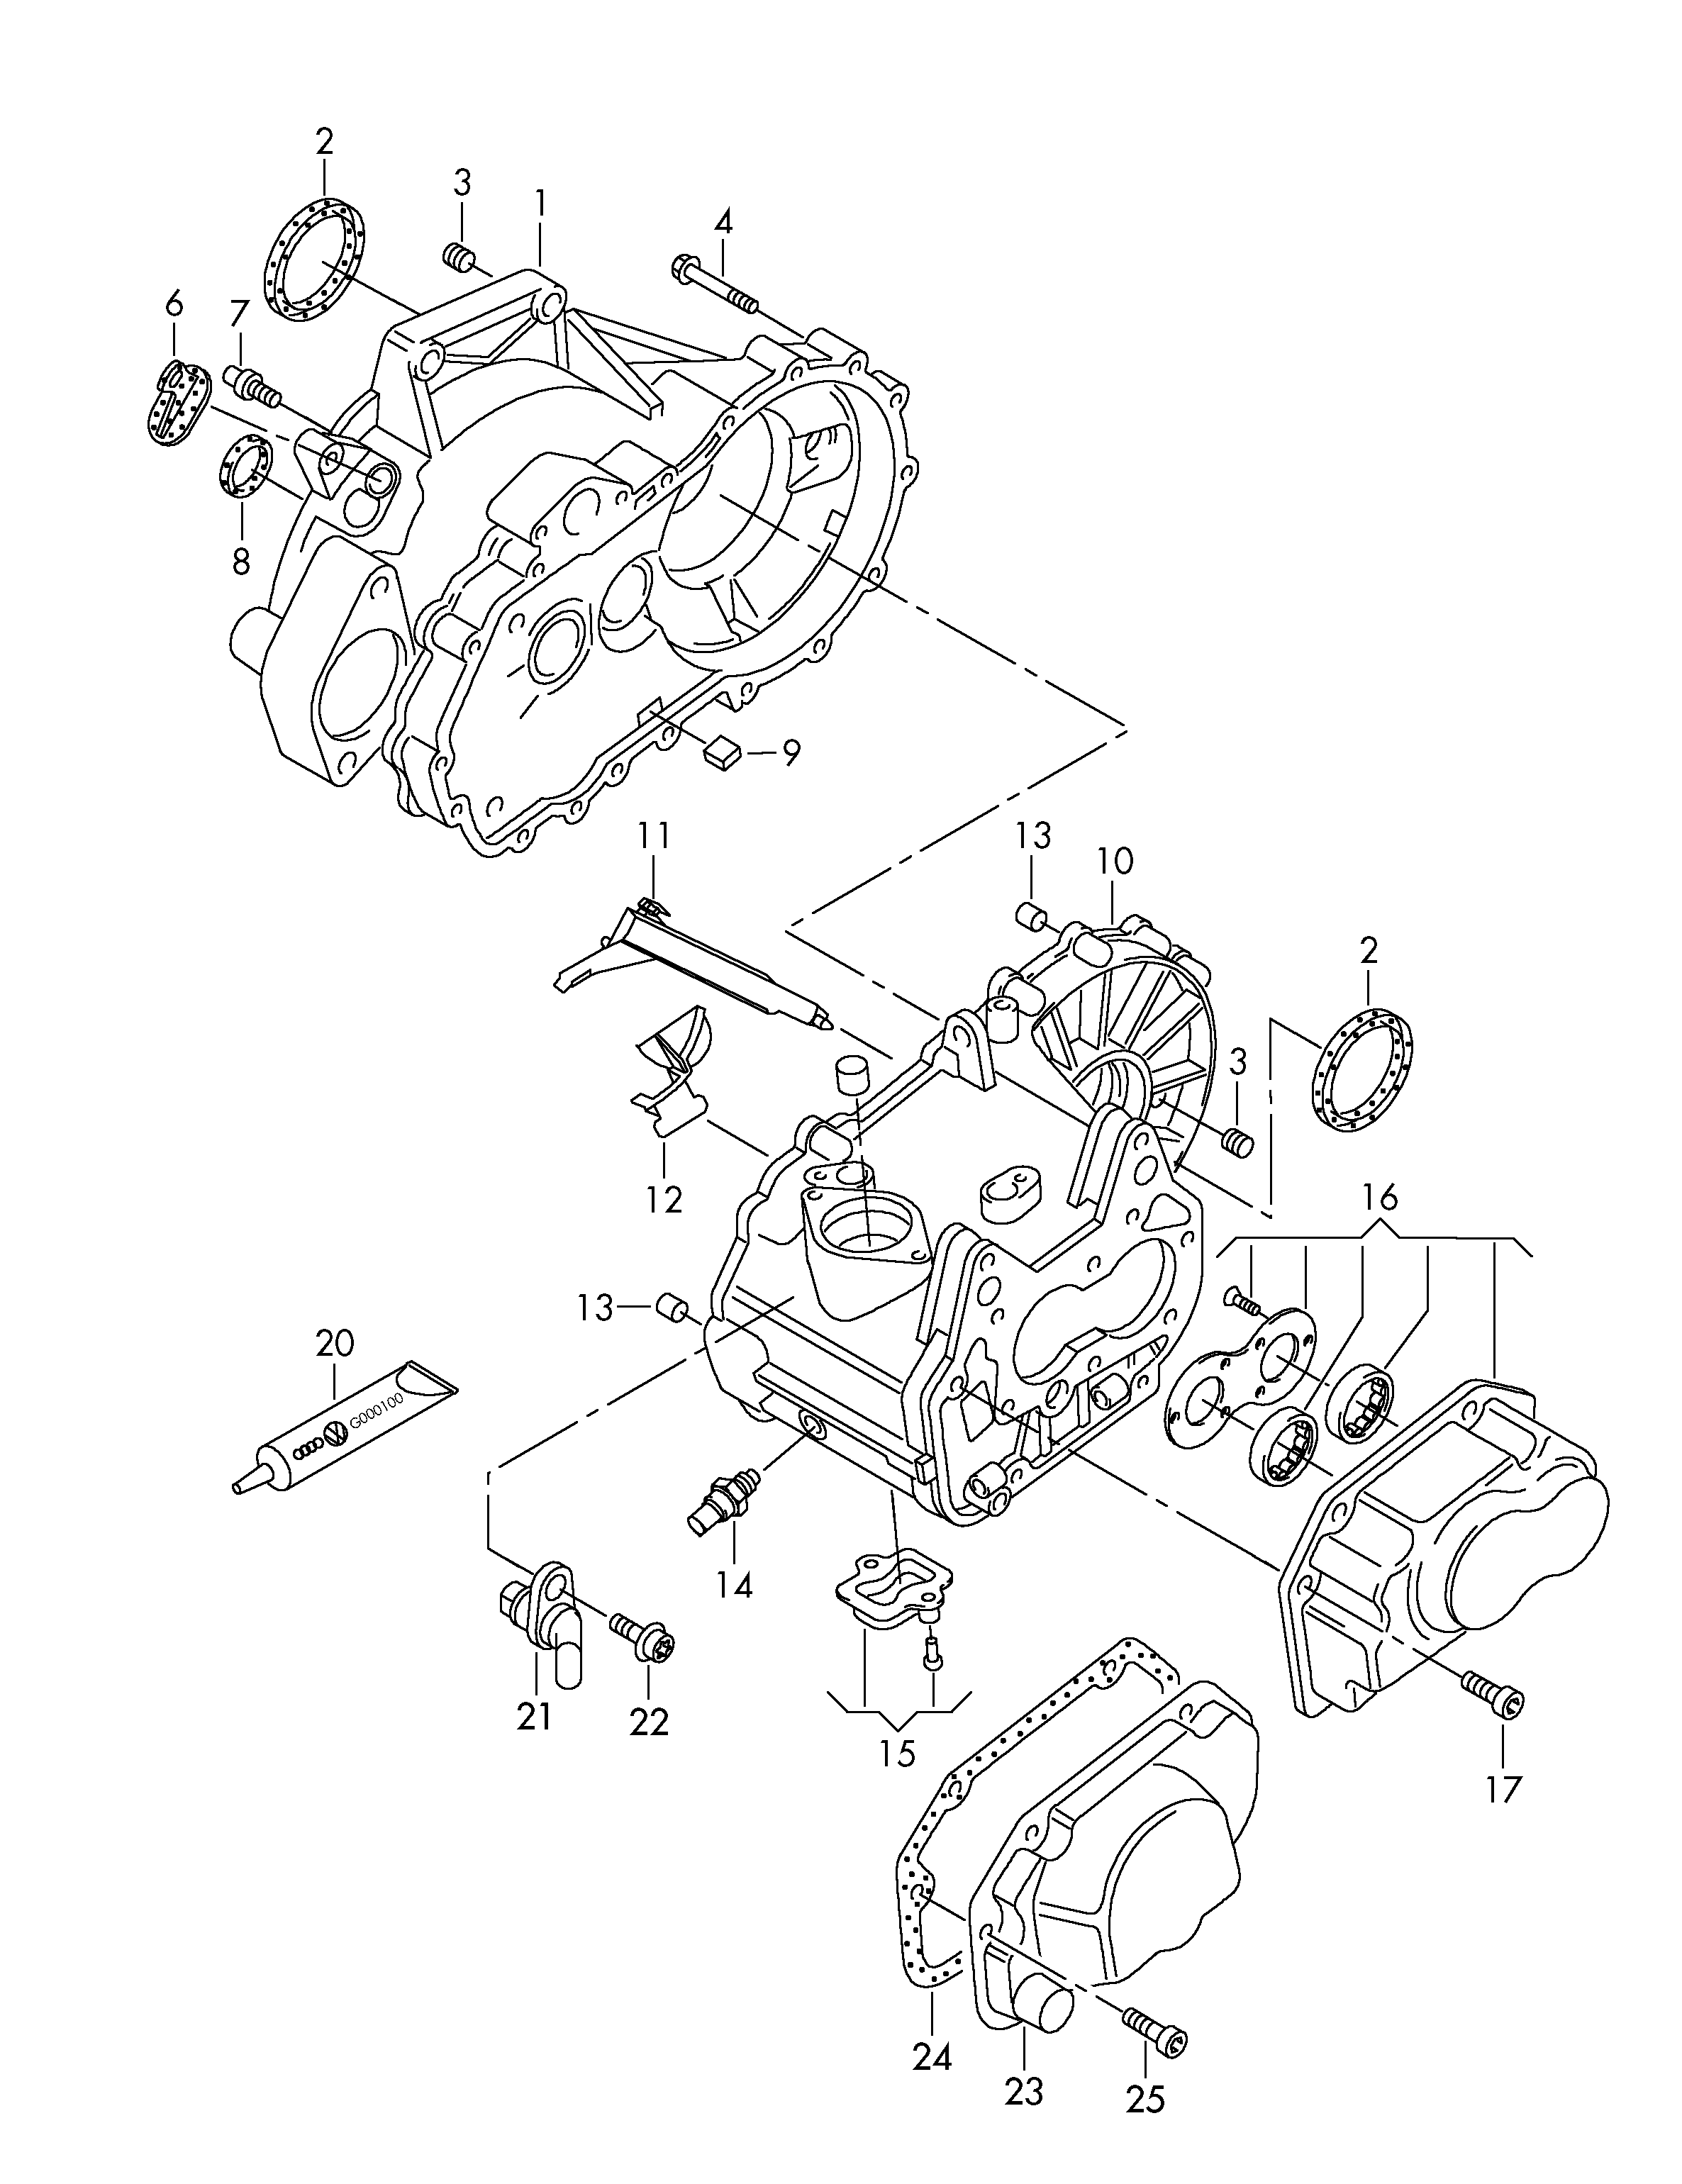 Getriebegehäusefür 6-Gang Schaltgetriebe  - Octavia - oct